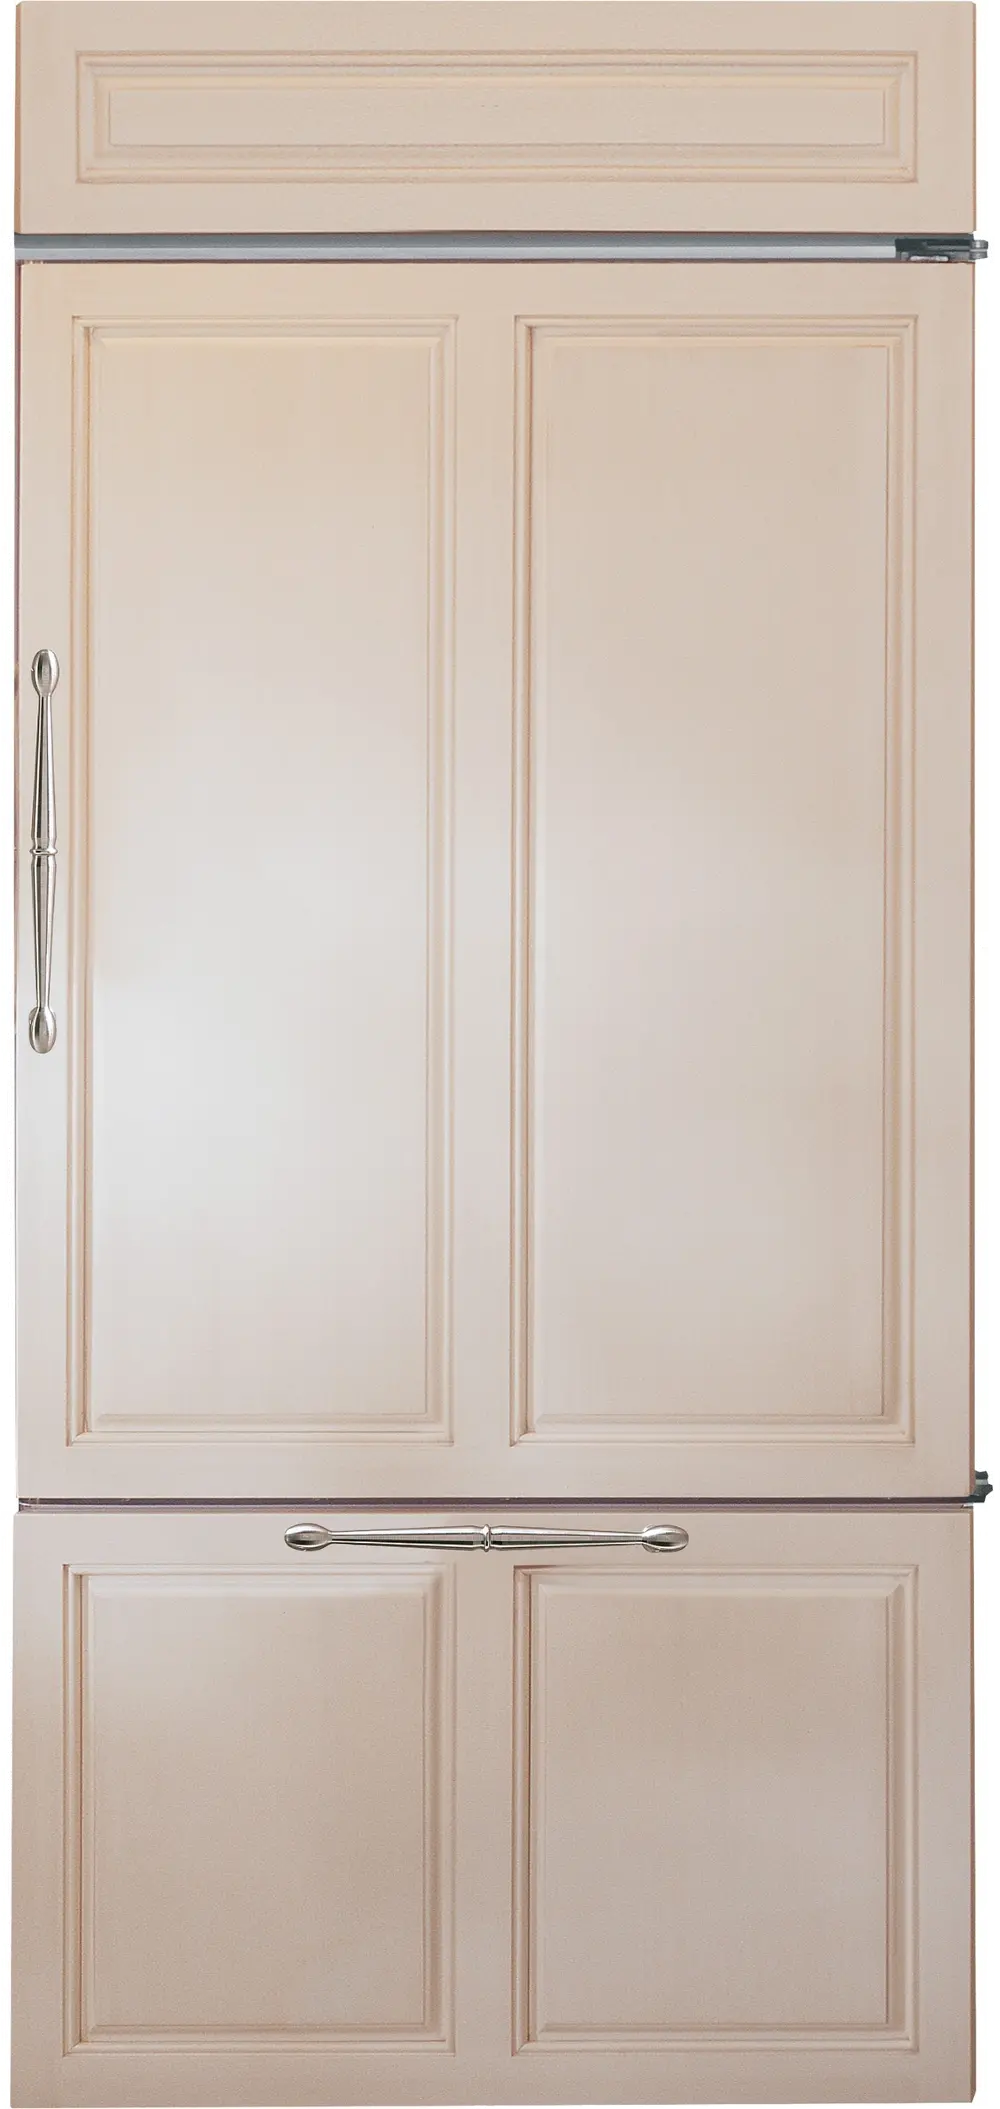 ZIC360NNRH Monogram 36 Inch Bottom Freezer Refrigerator - Panel Ready, 21.3 cu. ft.-1